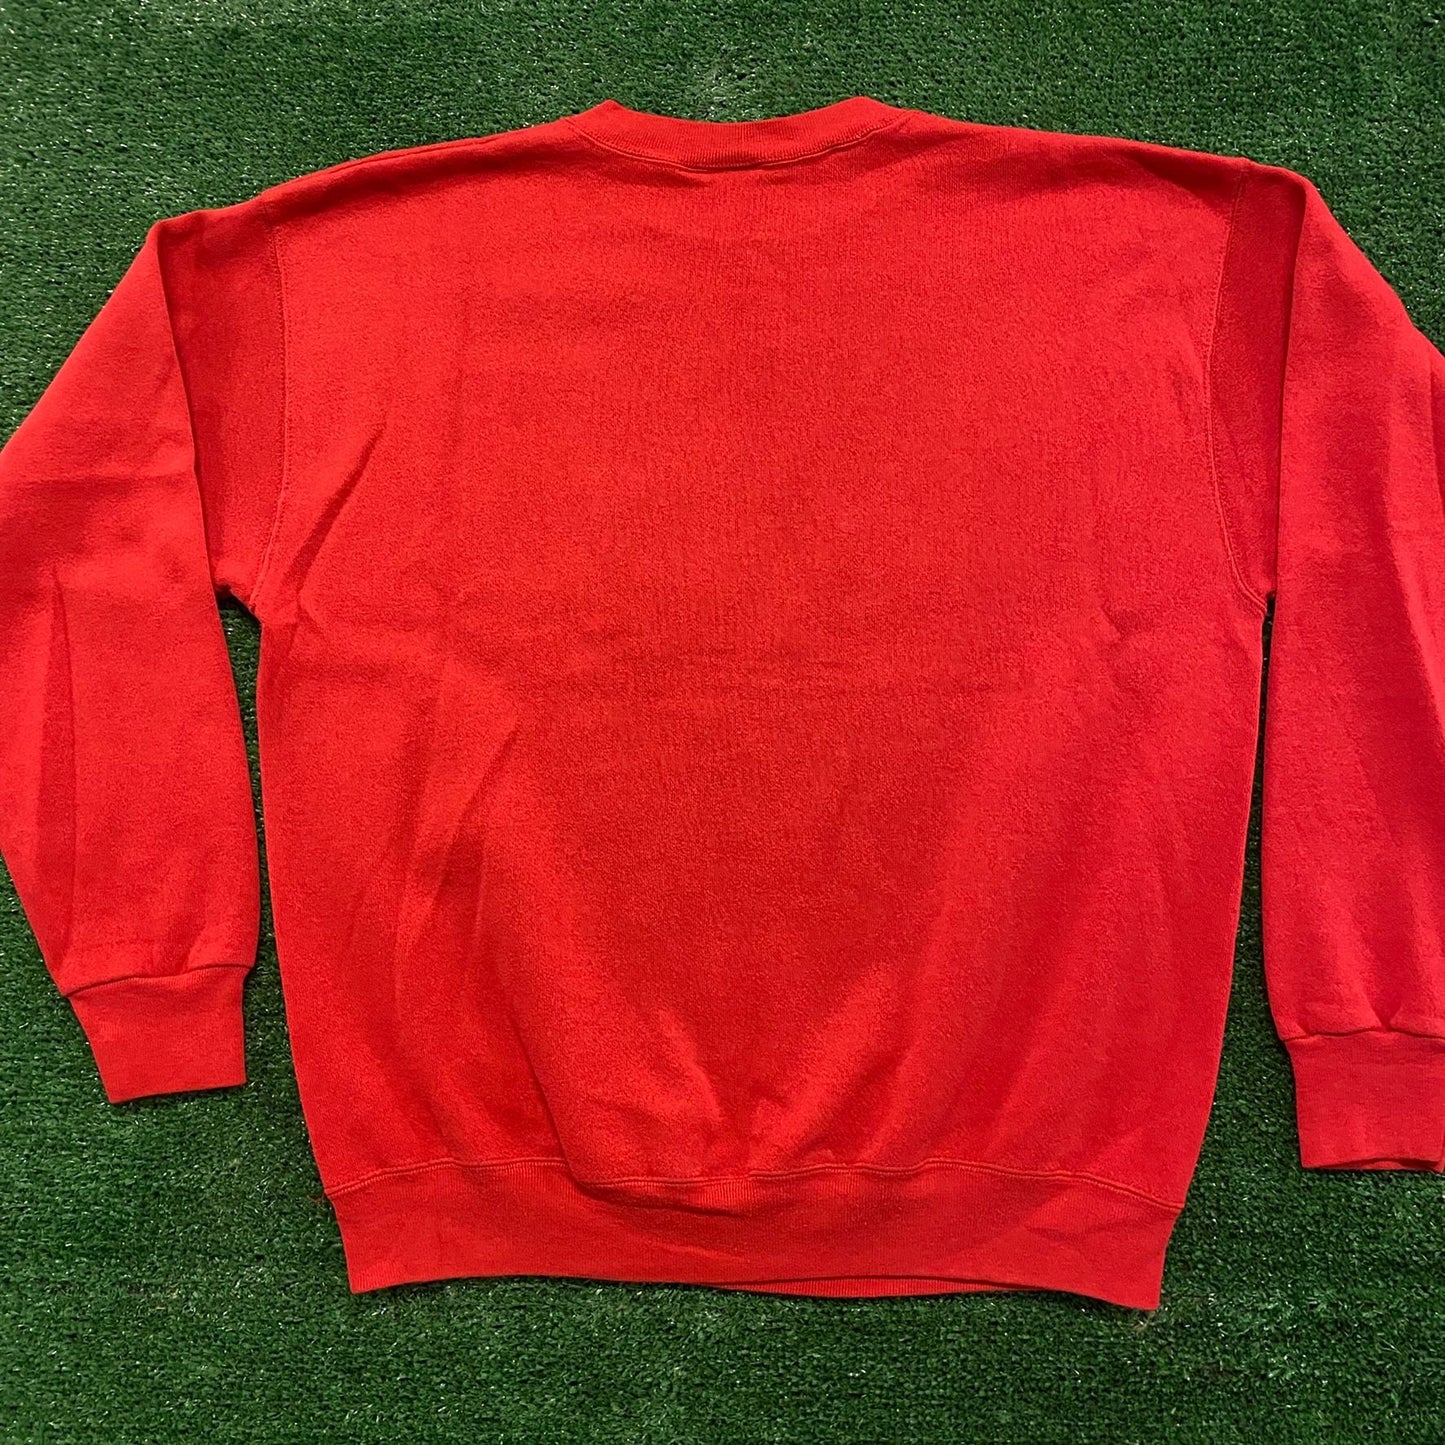 Red Basic Plain Blank Vintage 90s Crewneck Sweatshirt